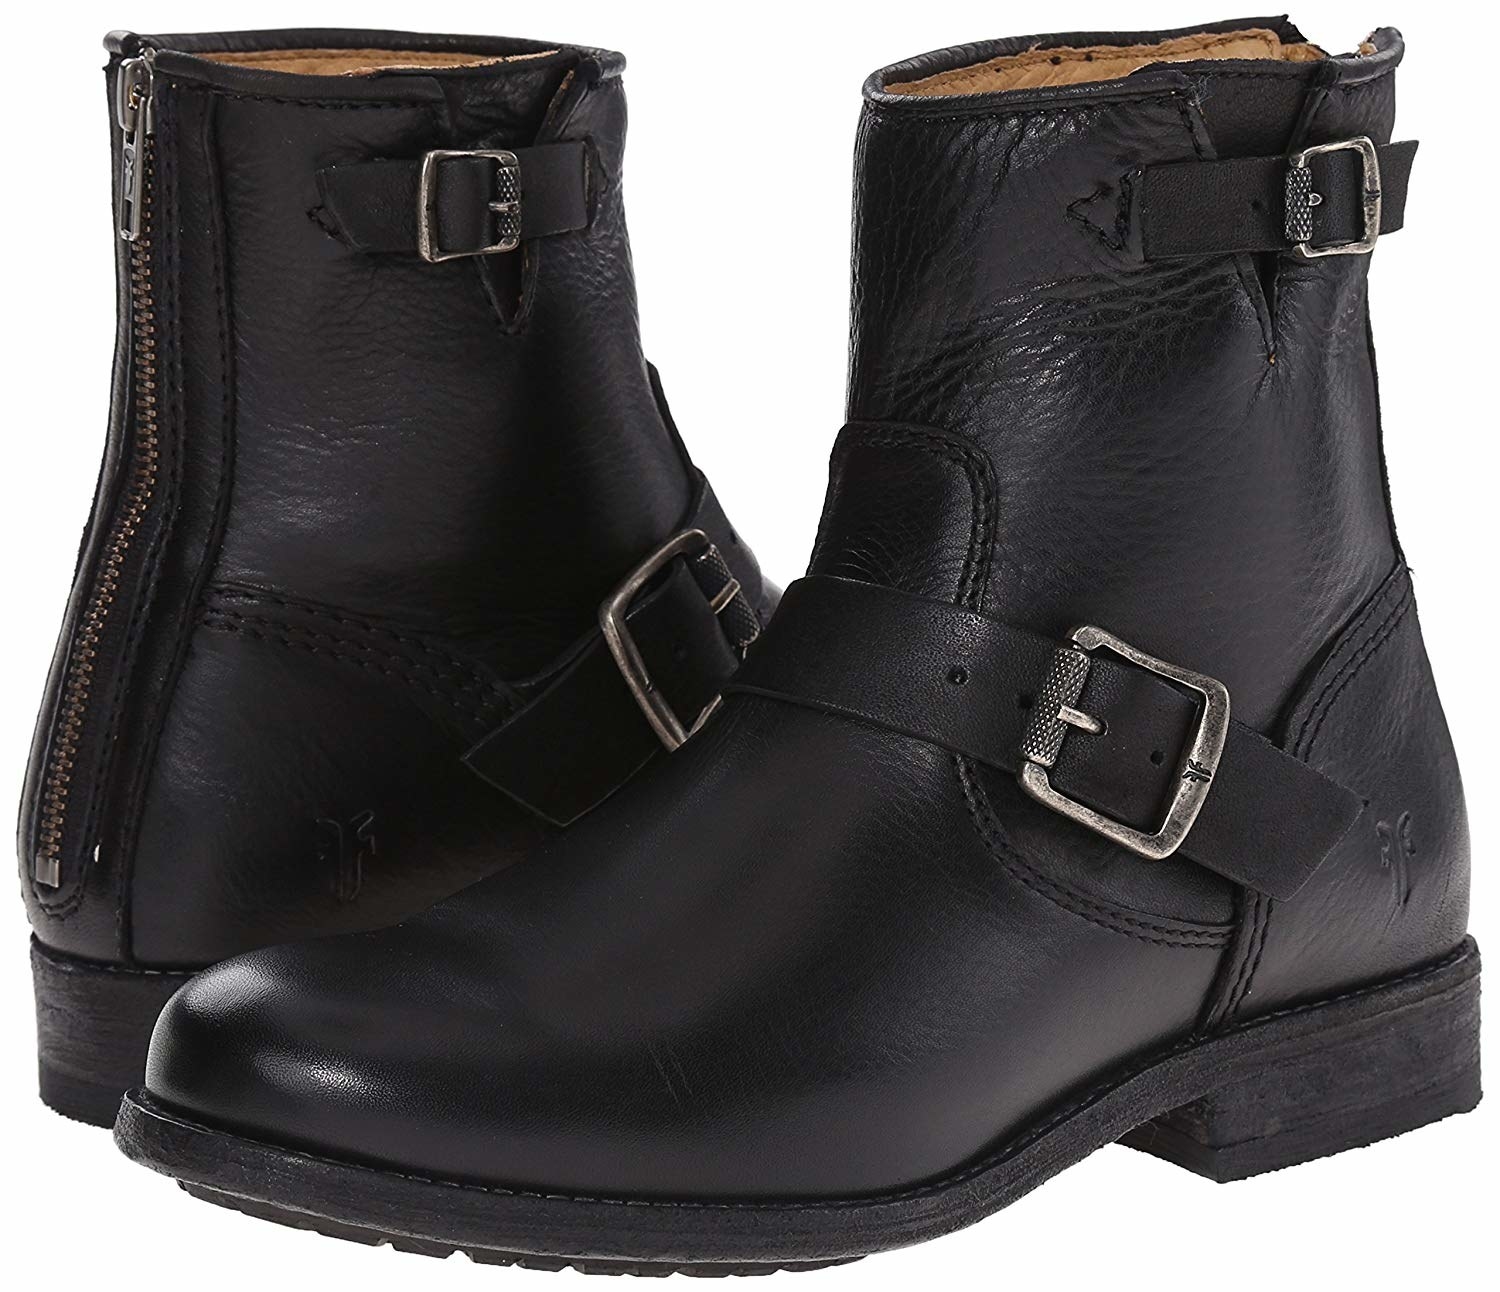 A pair of the Frye Engineer Boot in black